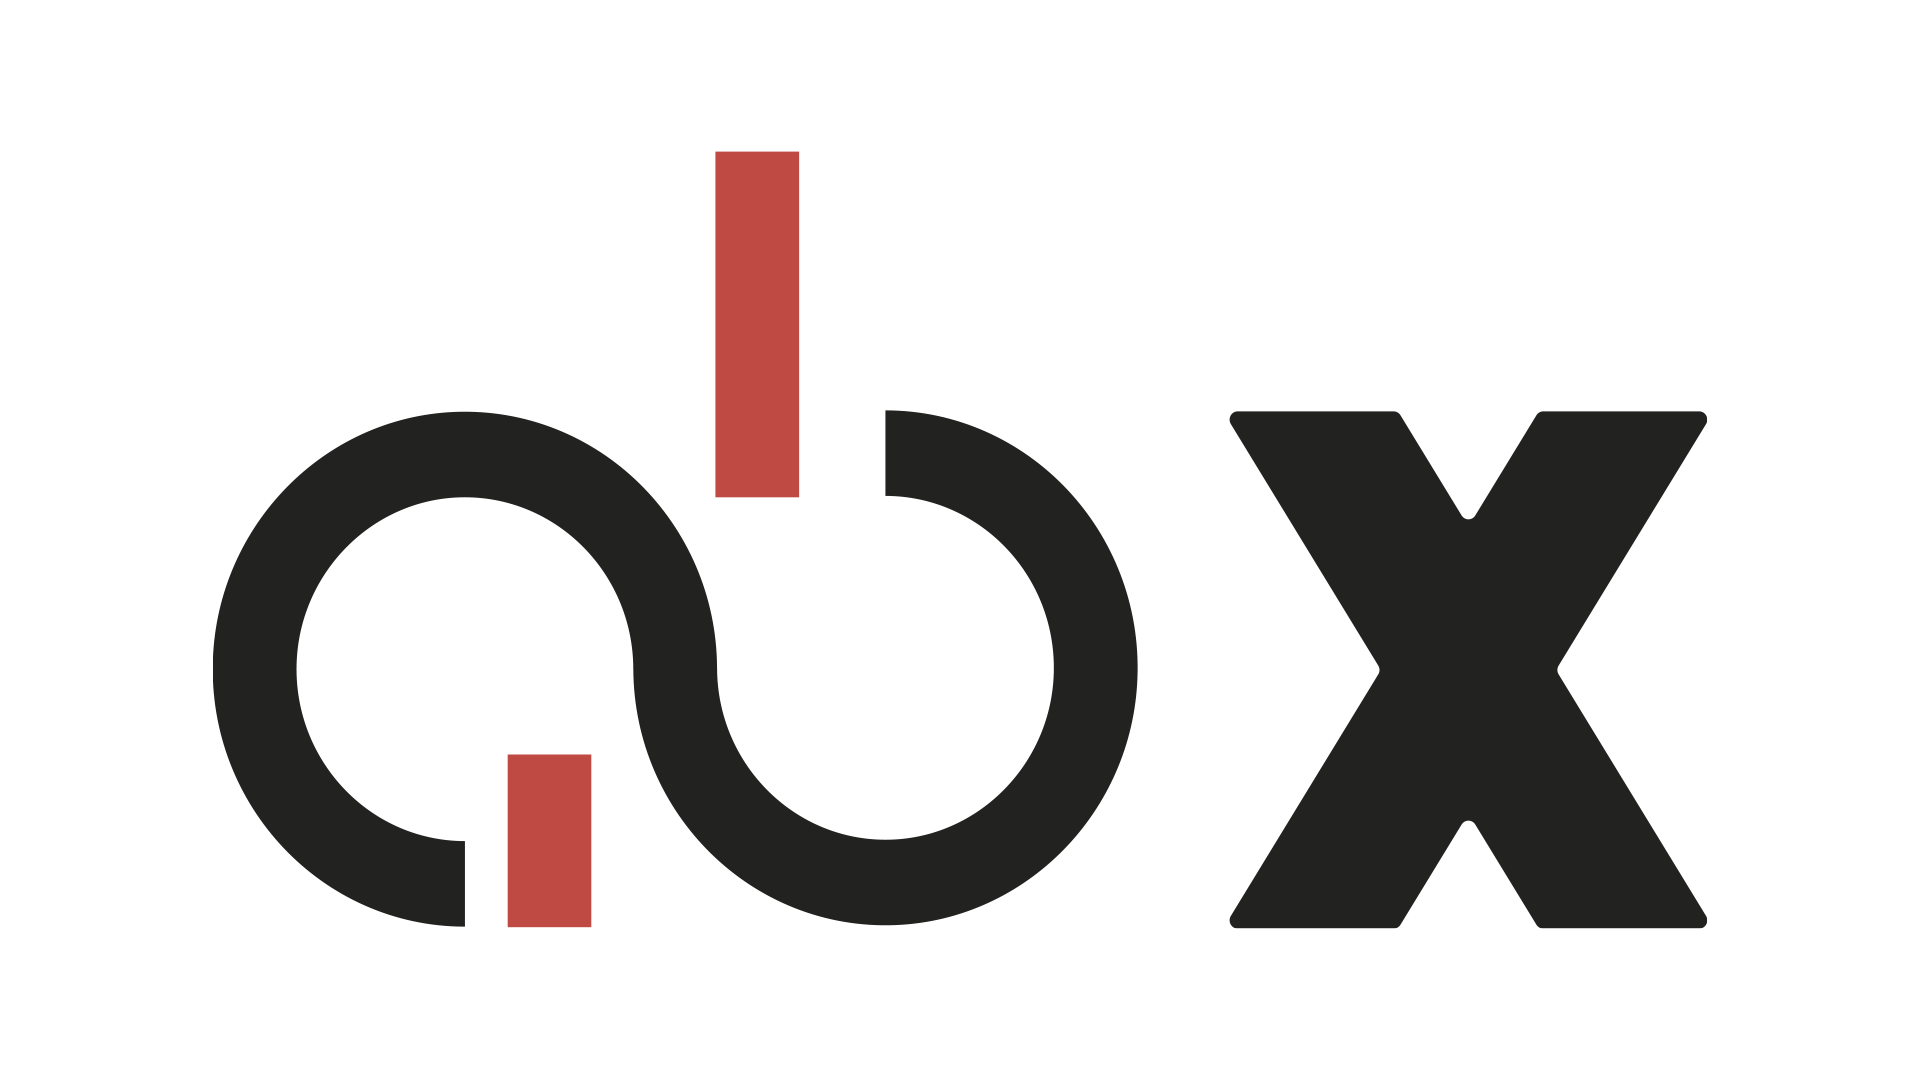 abx logo